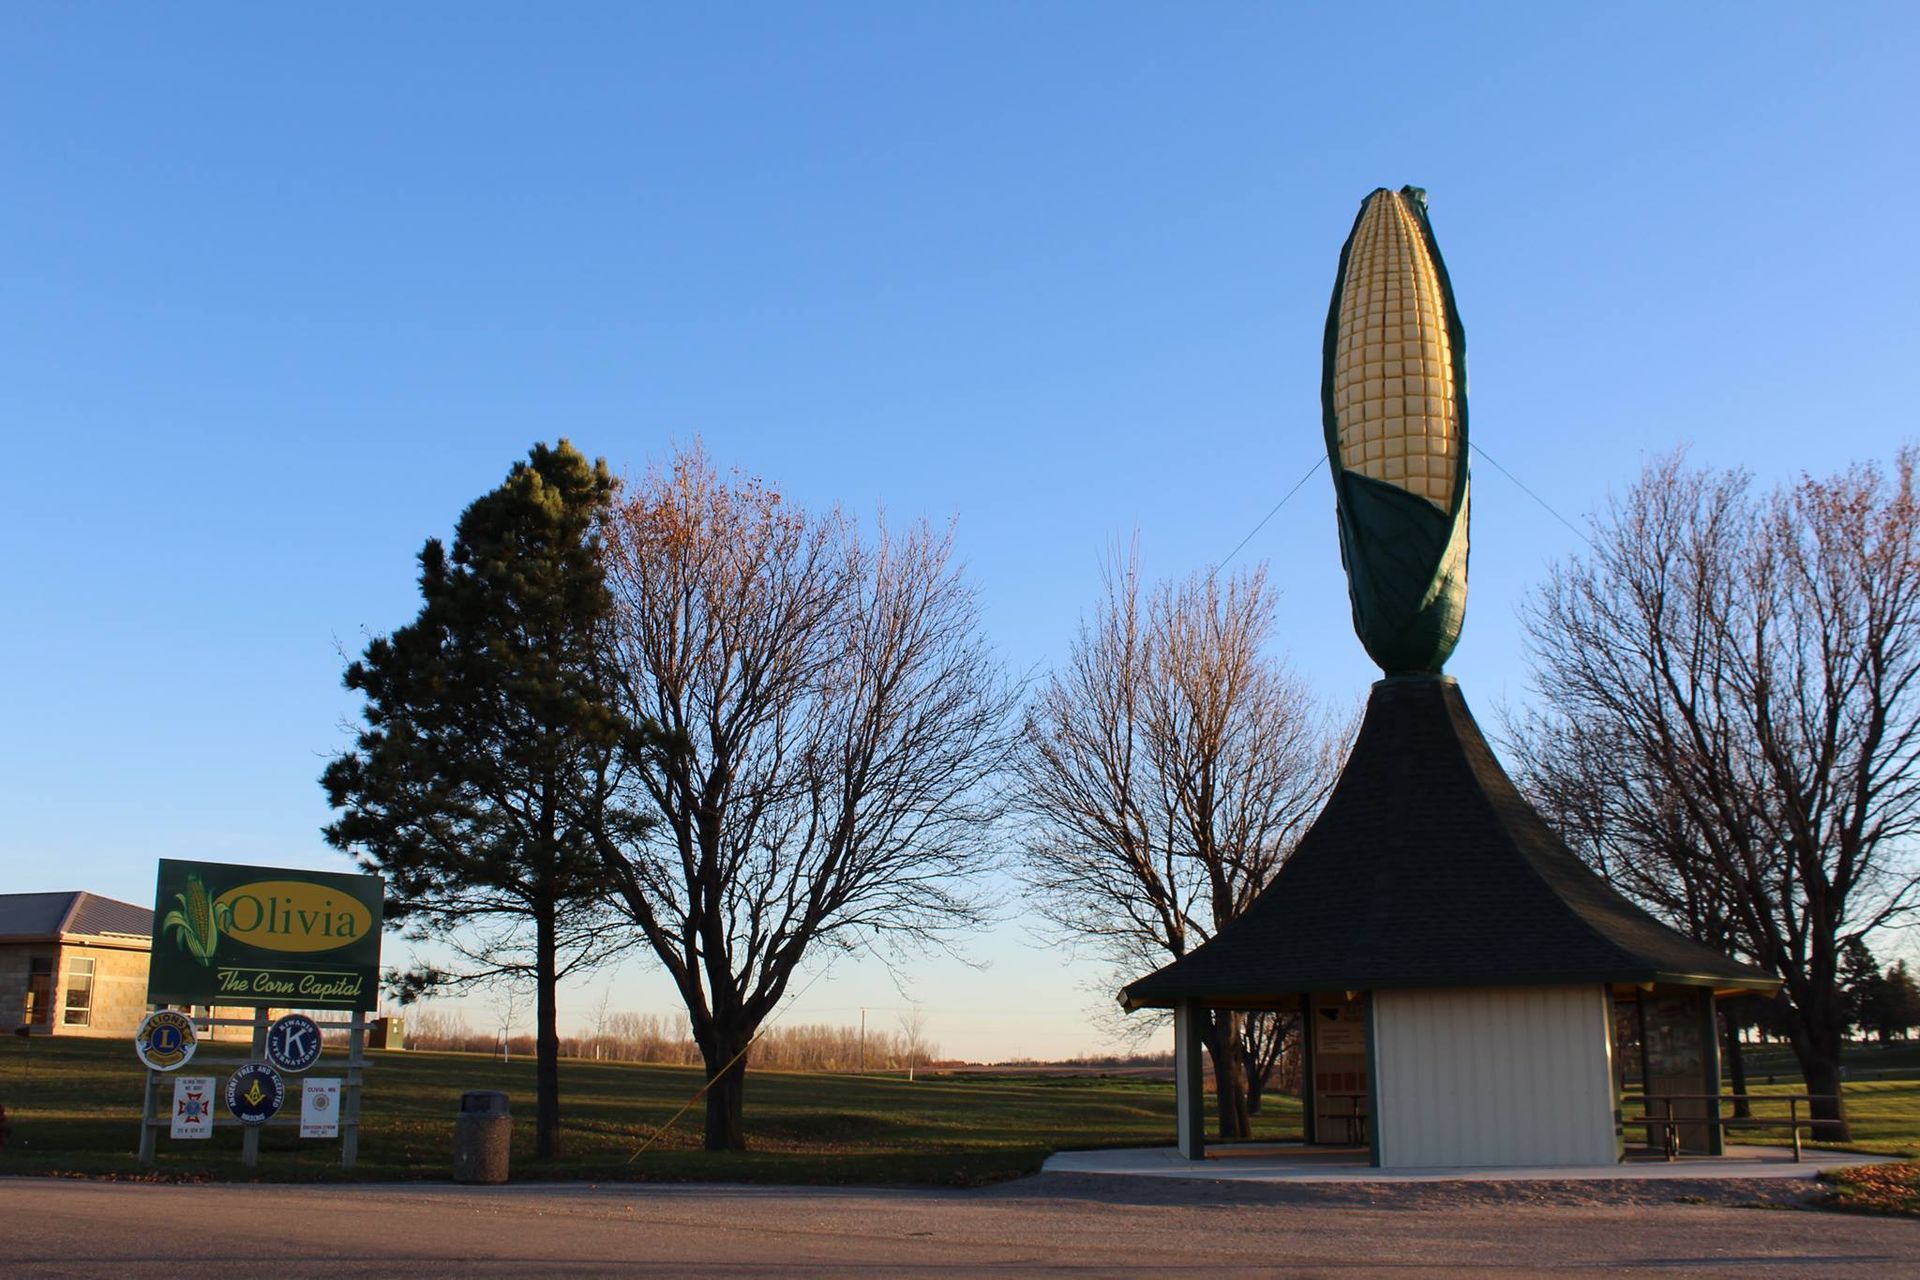 
World's Largest Ear of Corn, world record in Olivia, Minnesota